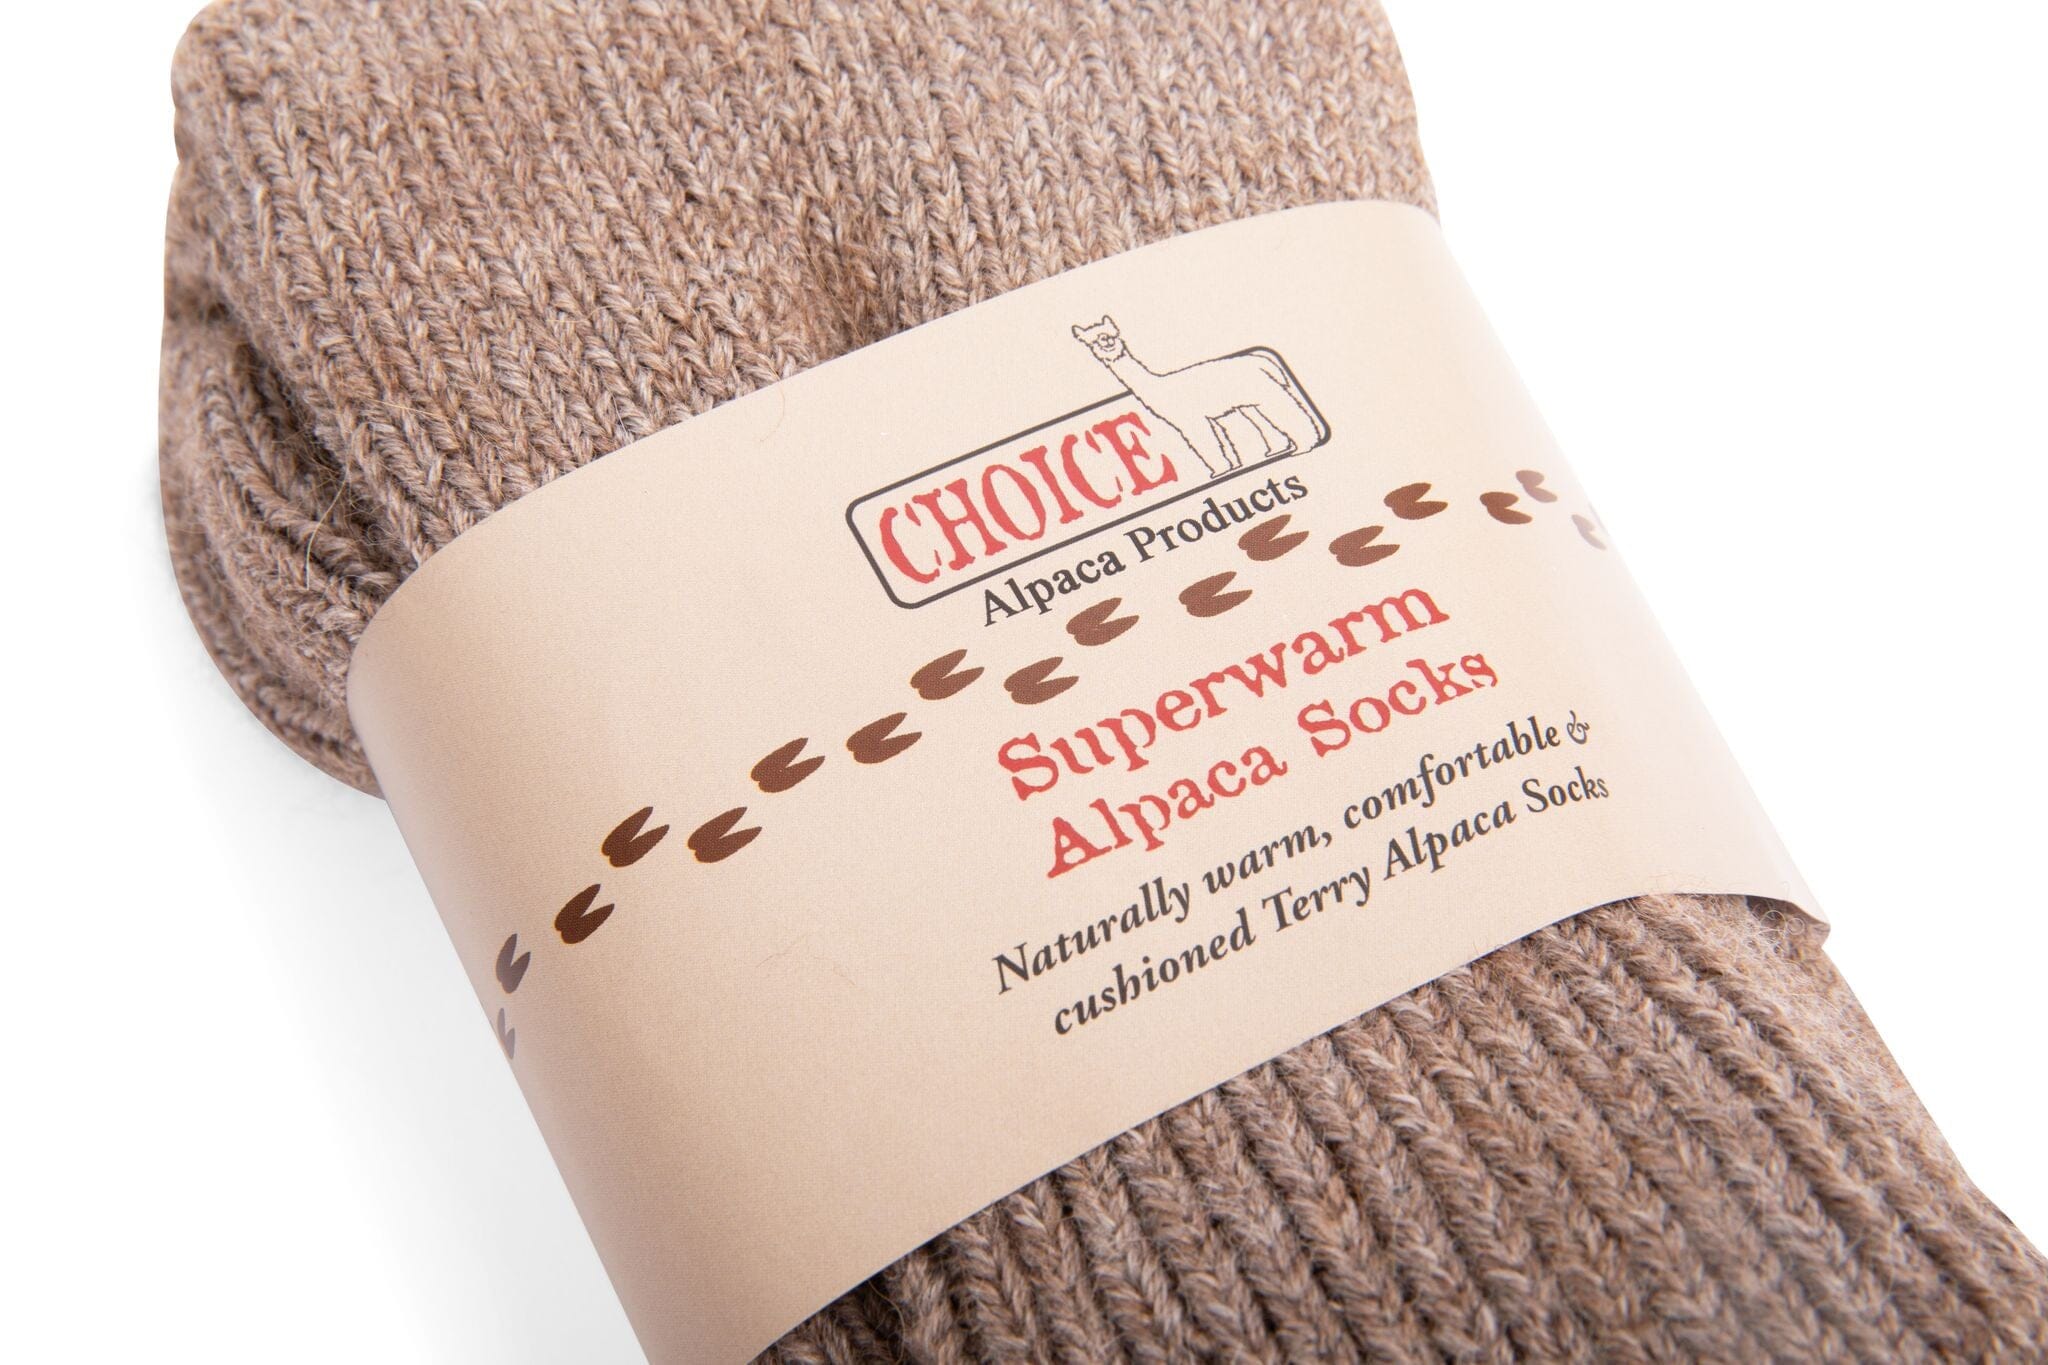 Super warm Heavy Extreme Alpaca Socks Warmest Socks Ever